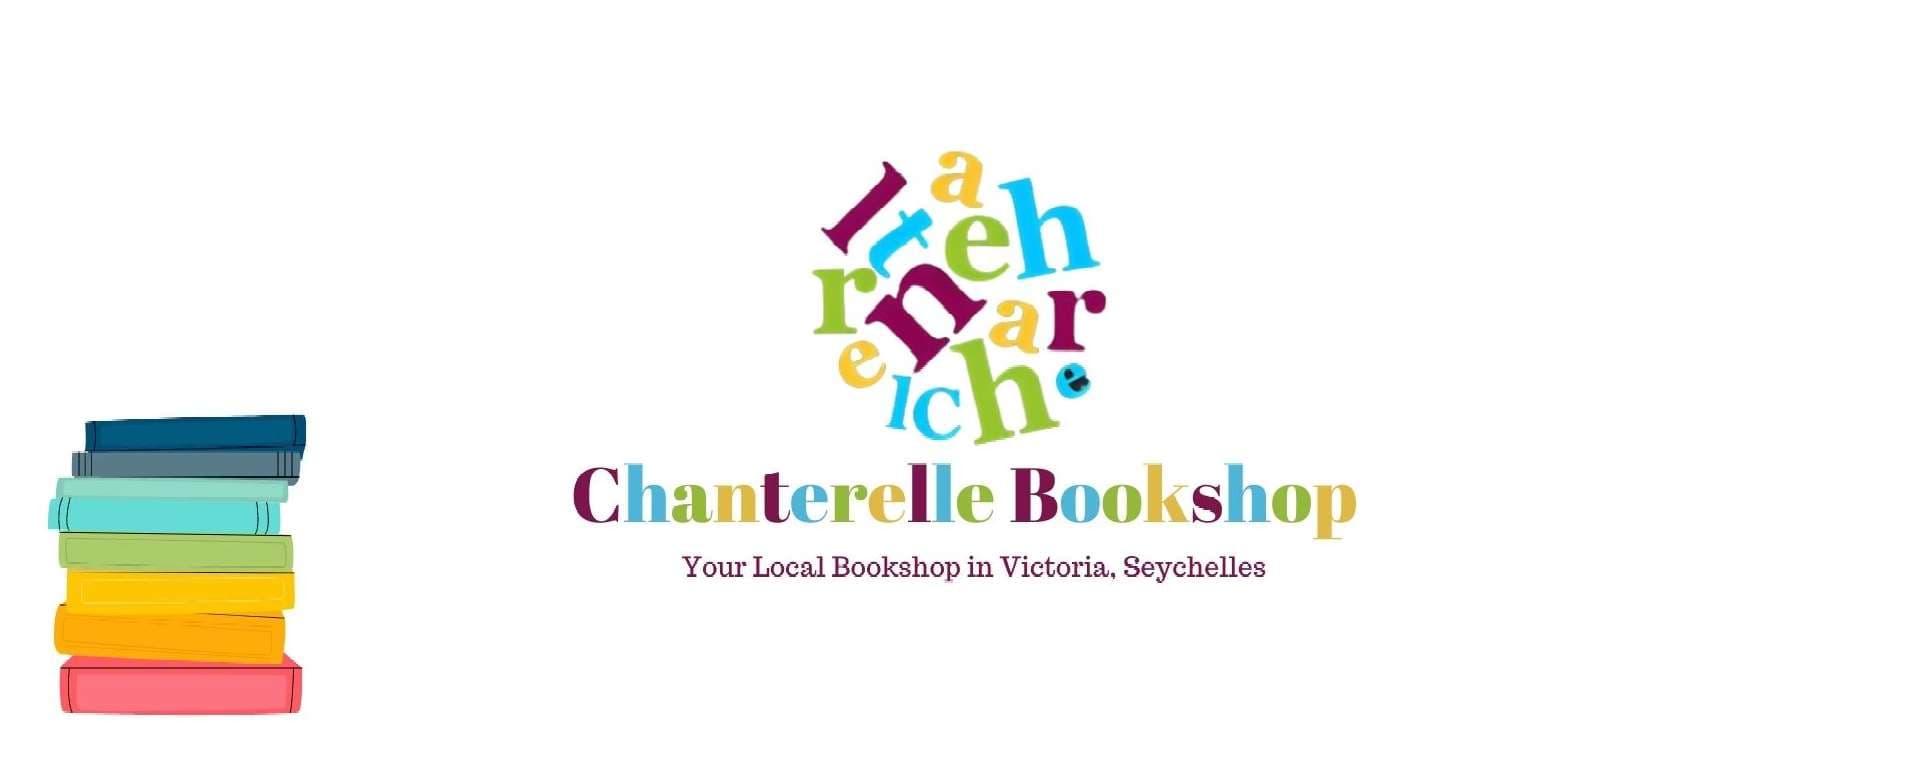 Chanterelle Bookshop